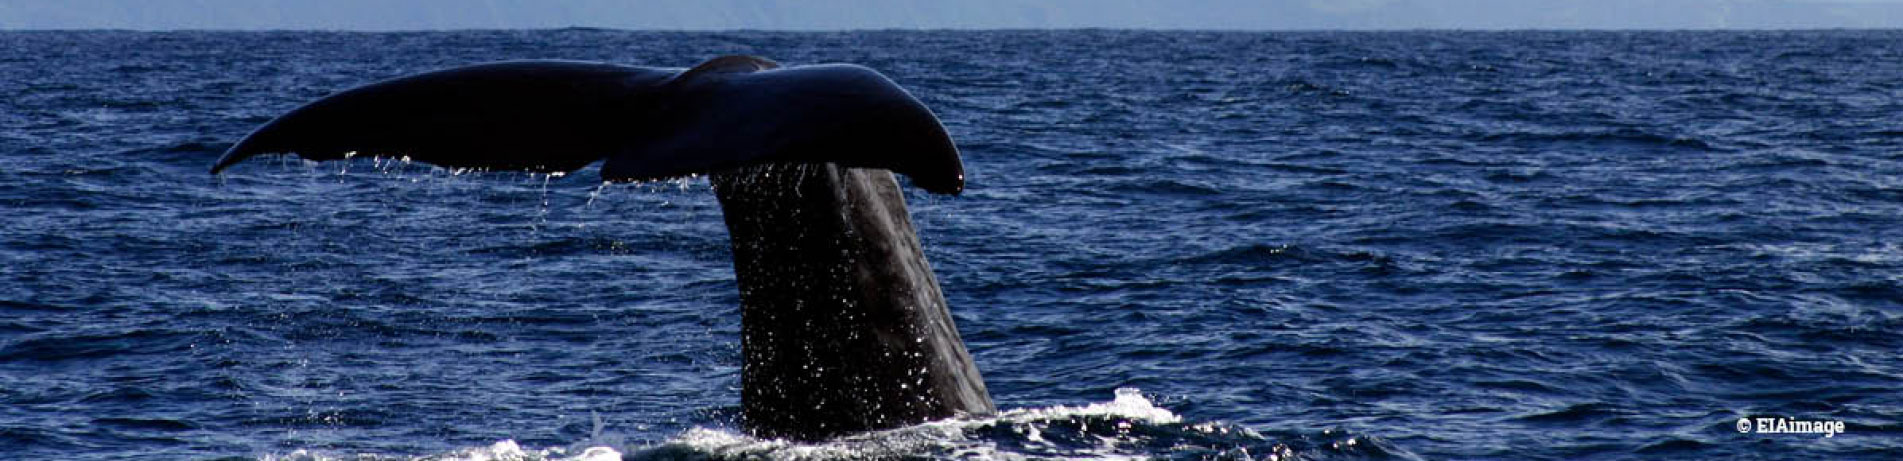 Whale tail fluke, New Zealand